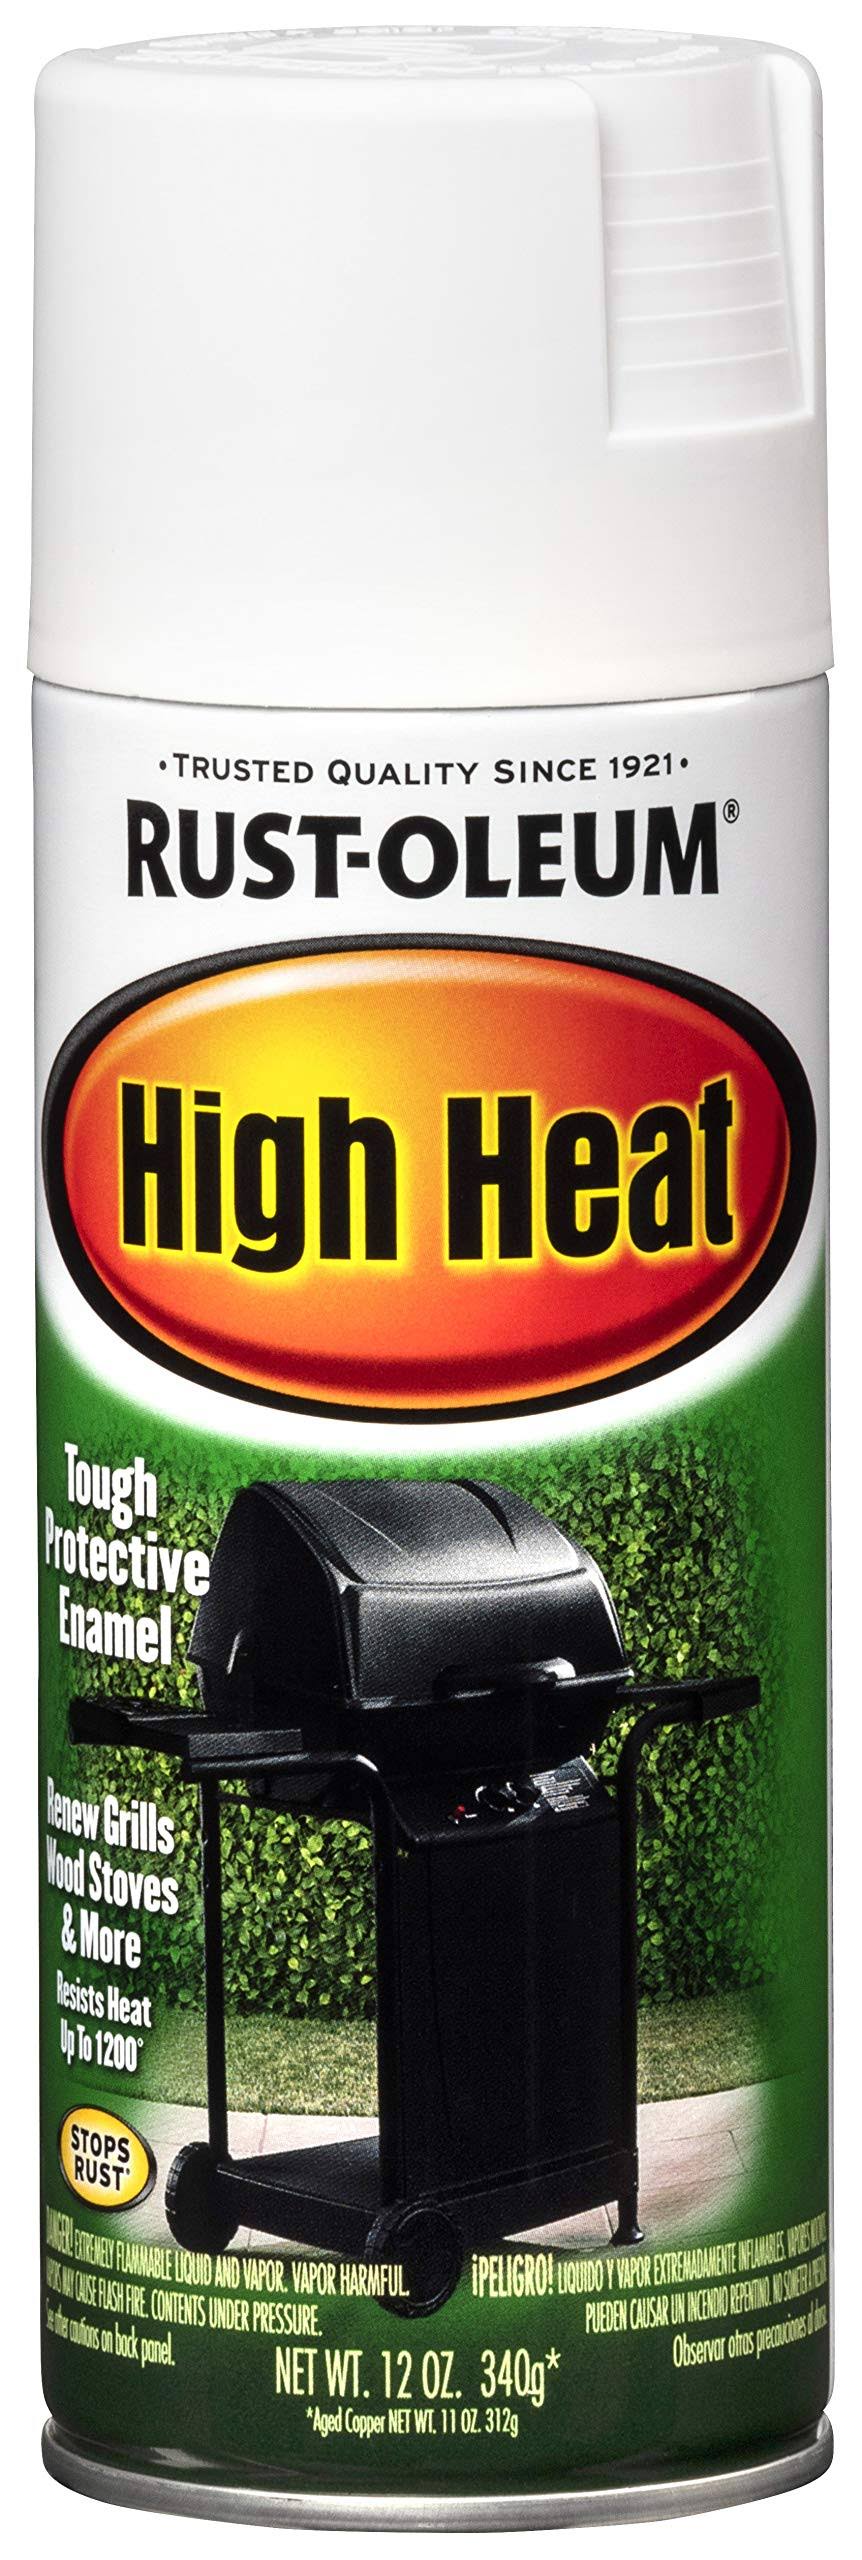 Rust-Oleum Specialty High Heat Spray Paint - 12oz, White